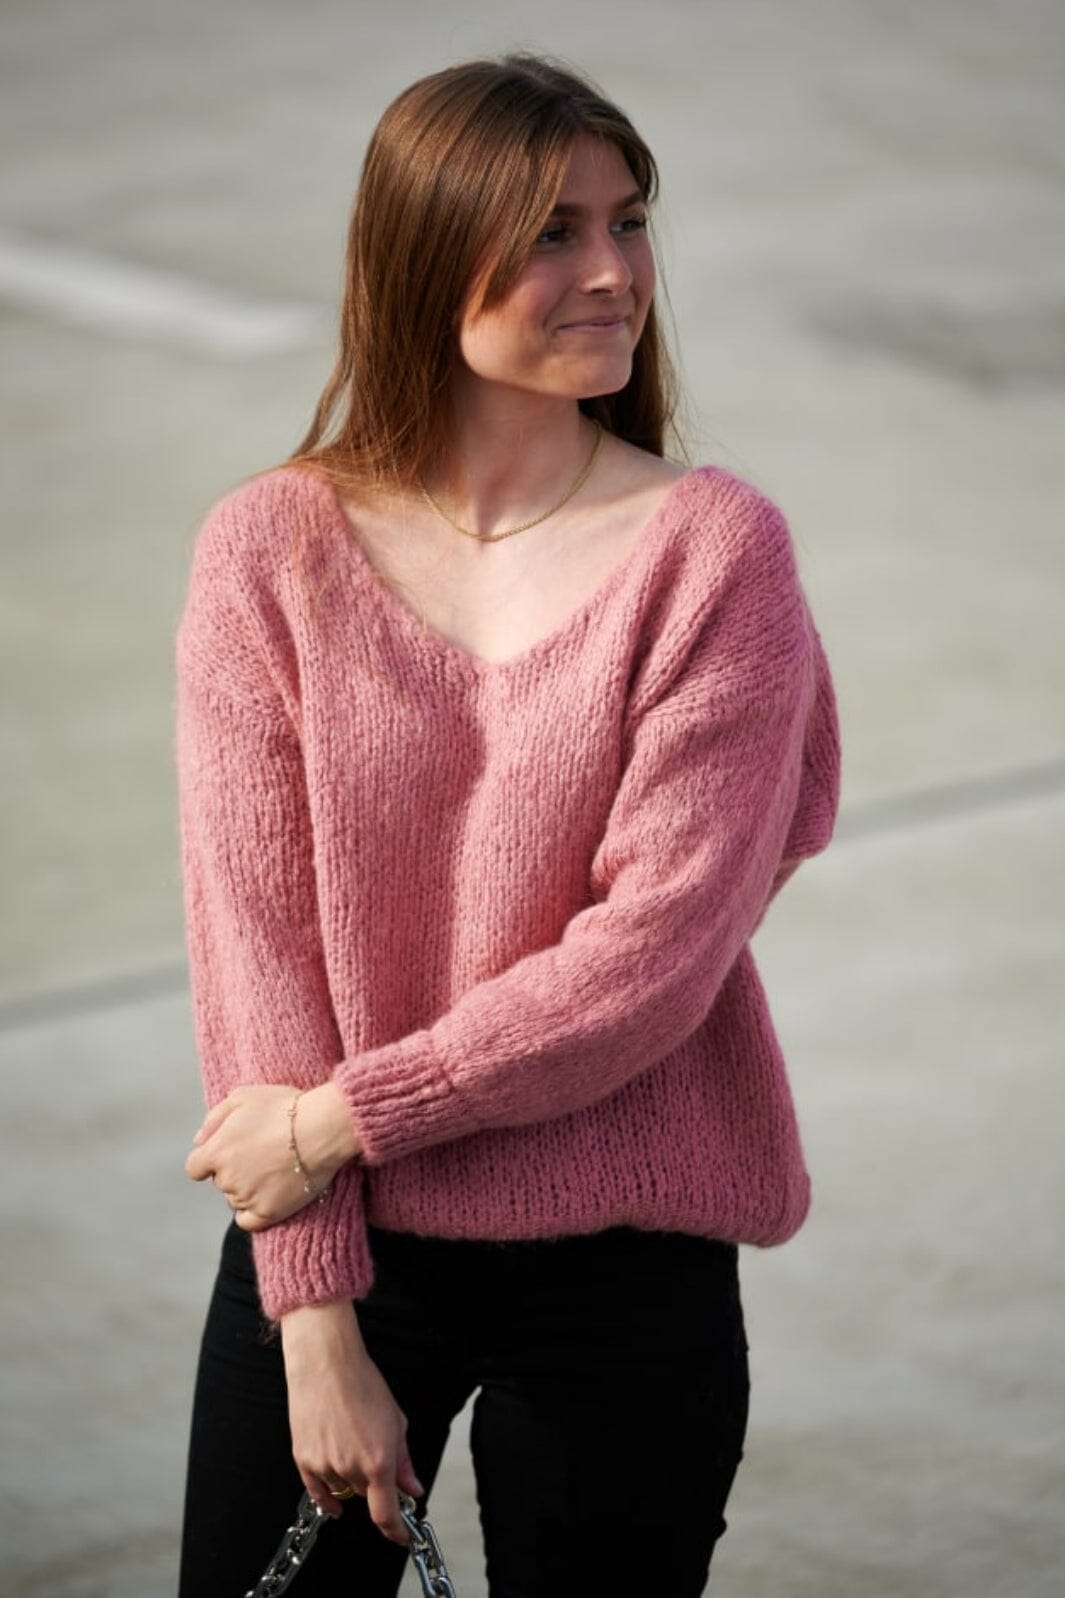 Noella - Fora Knit V-Neck Sweater - 005 Rose Strikbluser 